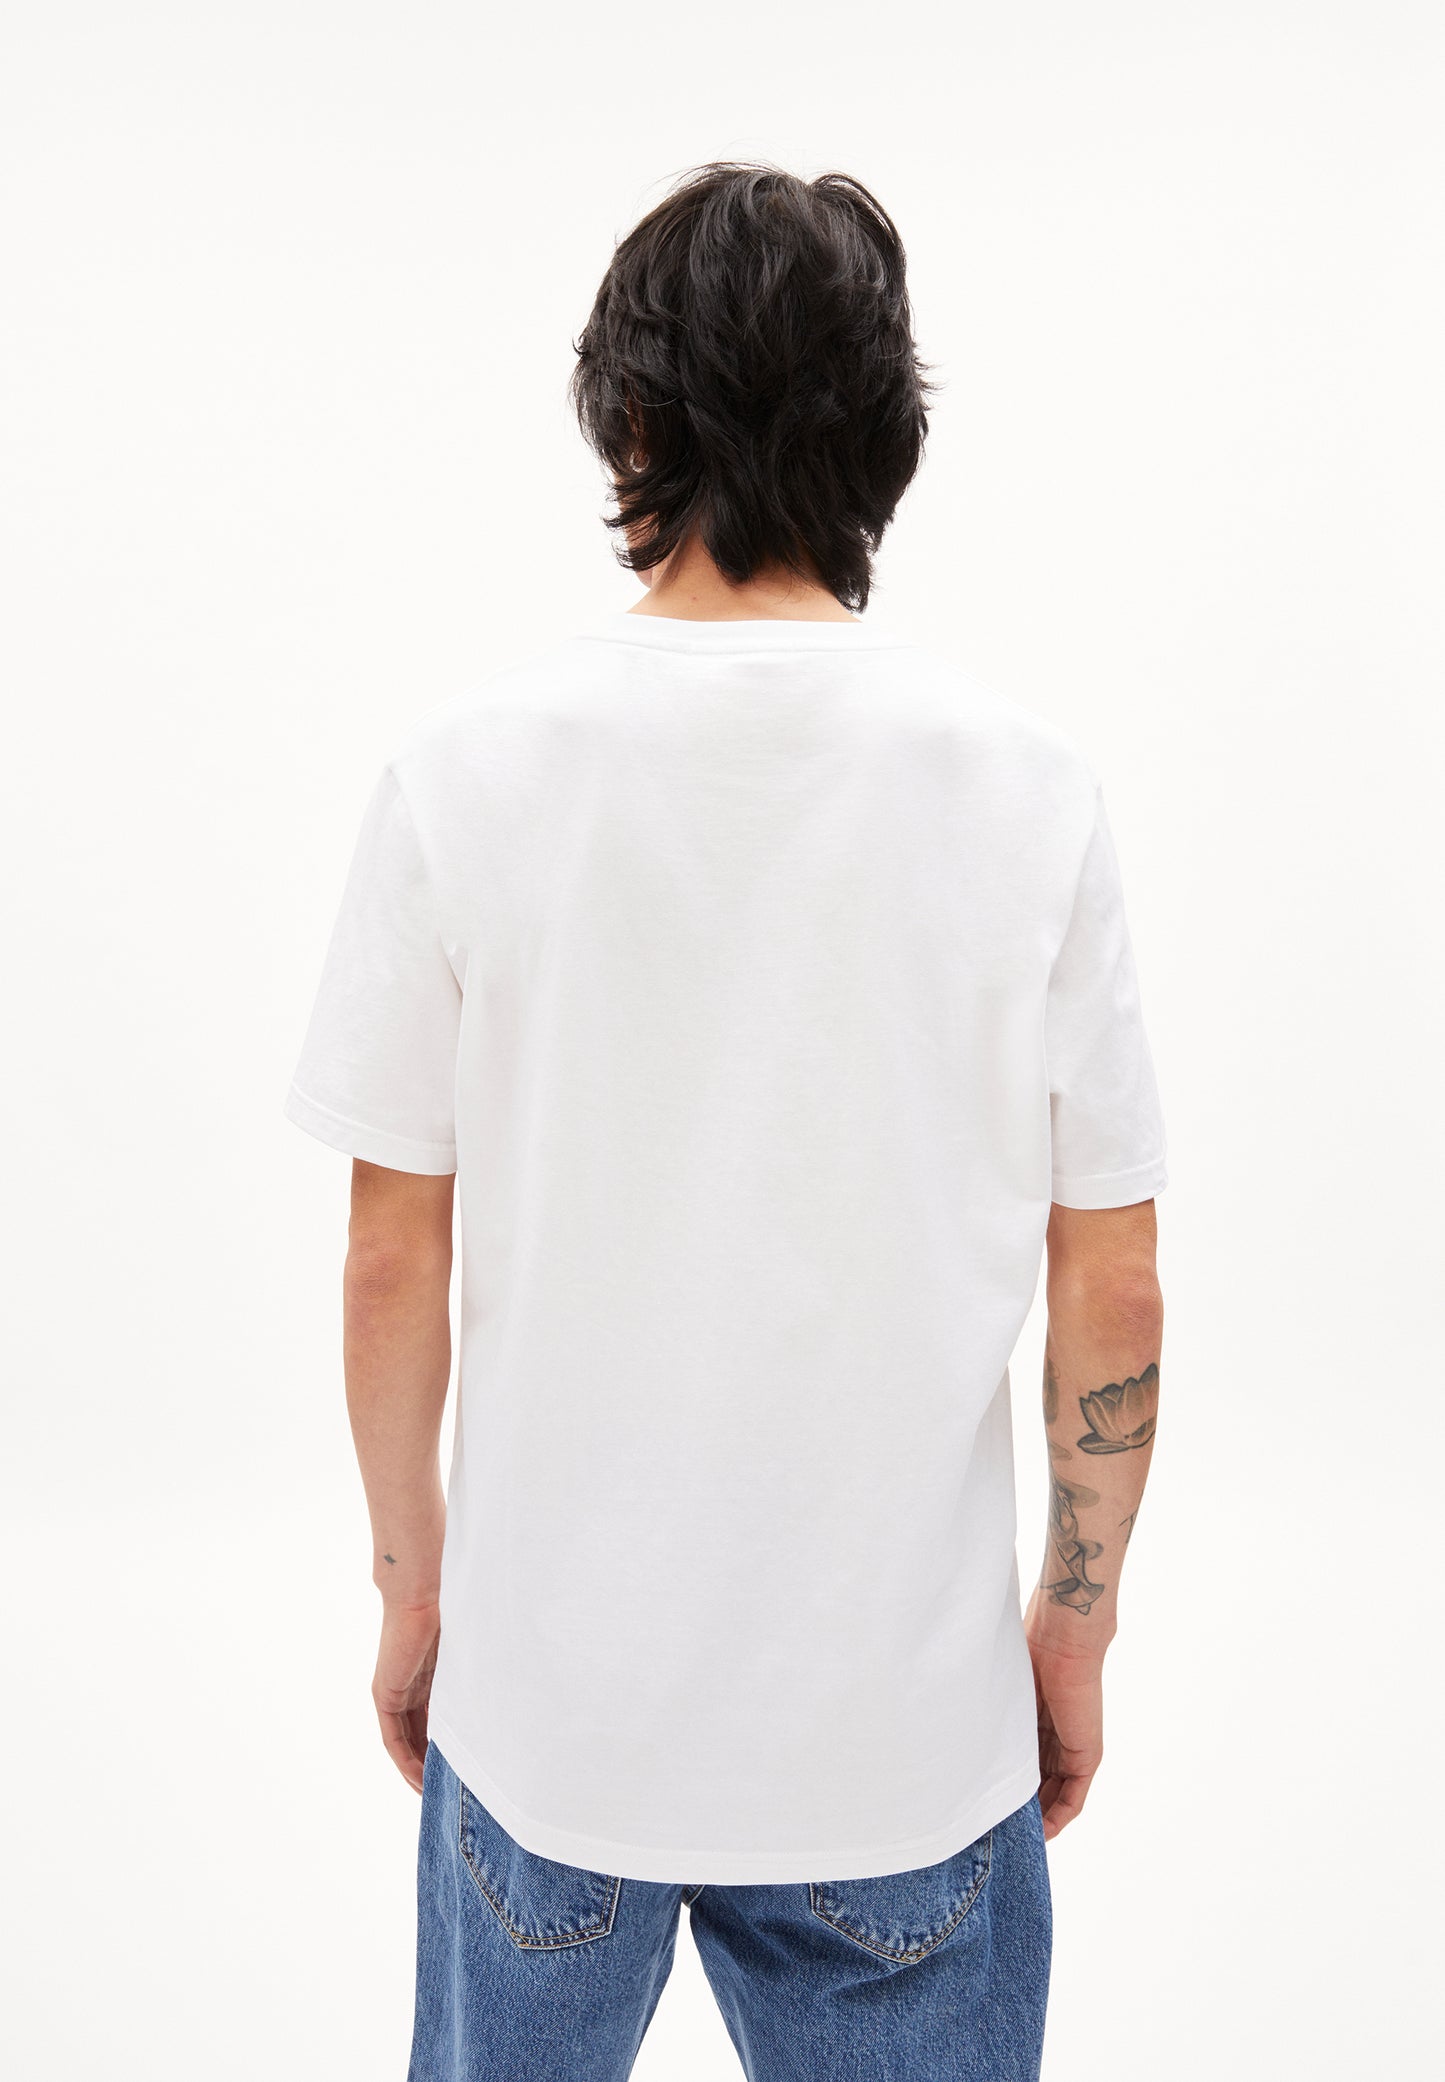 
                  
                    LAARON White T-Shirt
                  
                